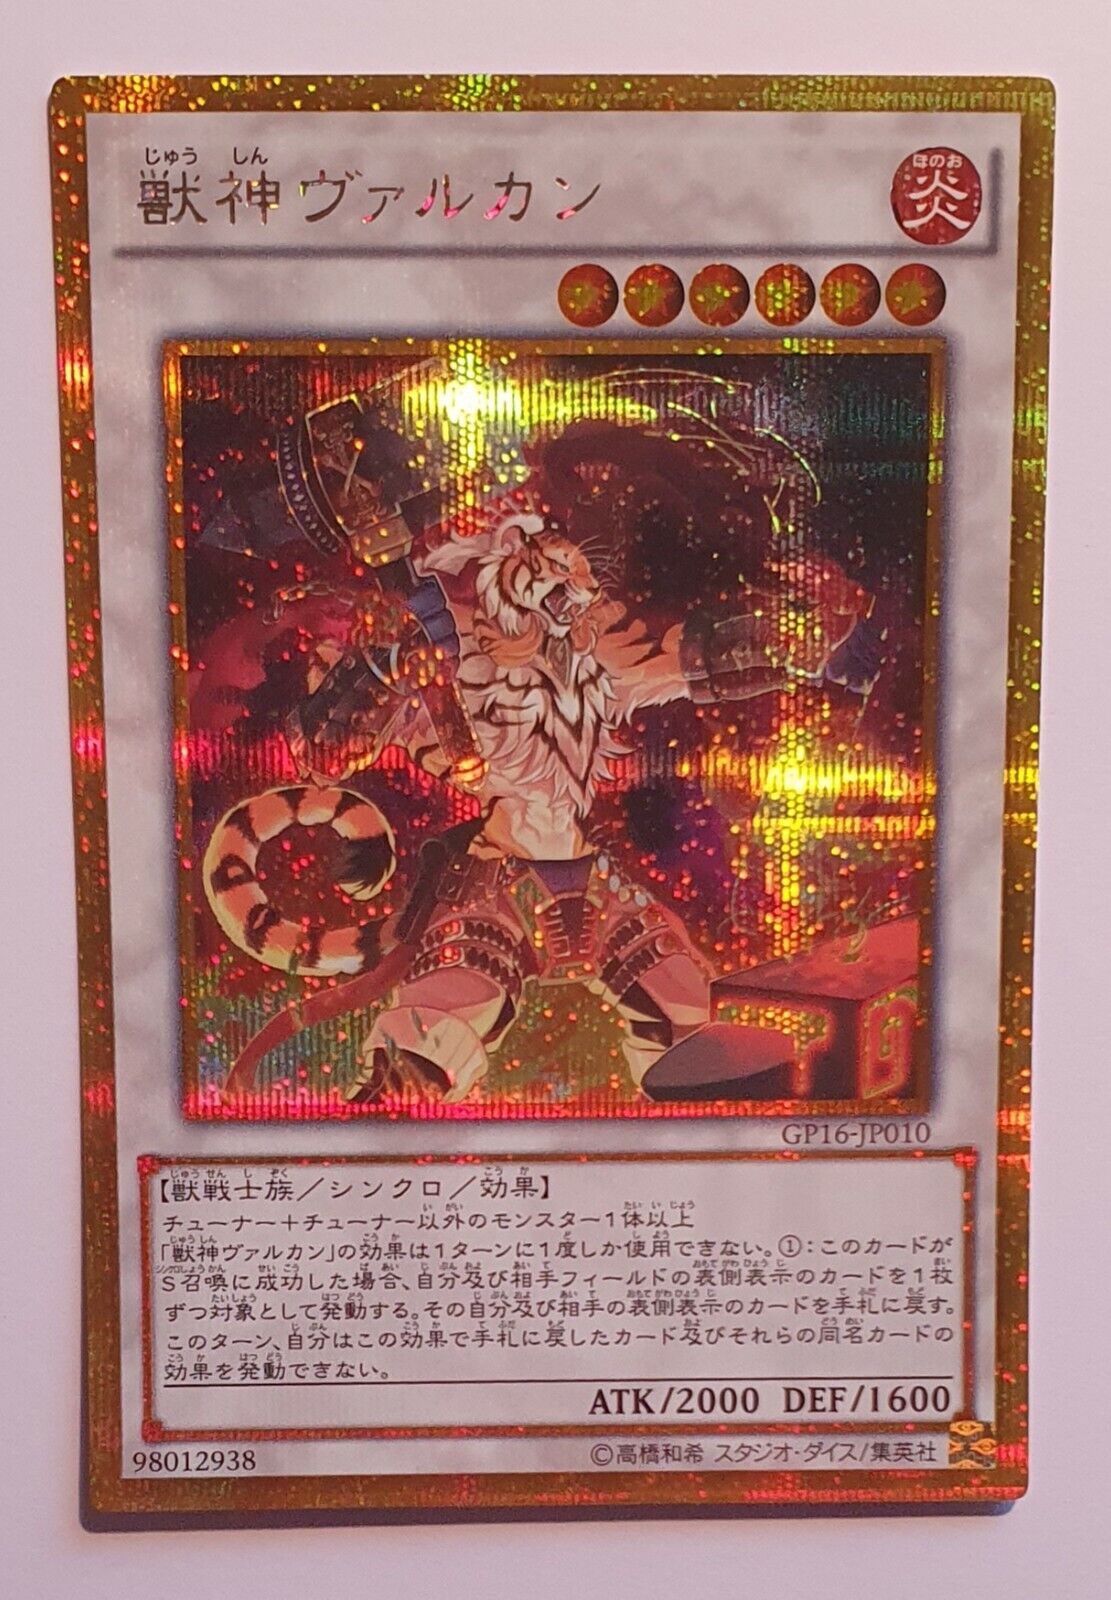 Yugioh Beast God Vulcan GP16-JP010 Gold Secret Rare